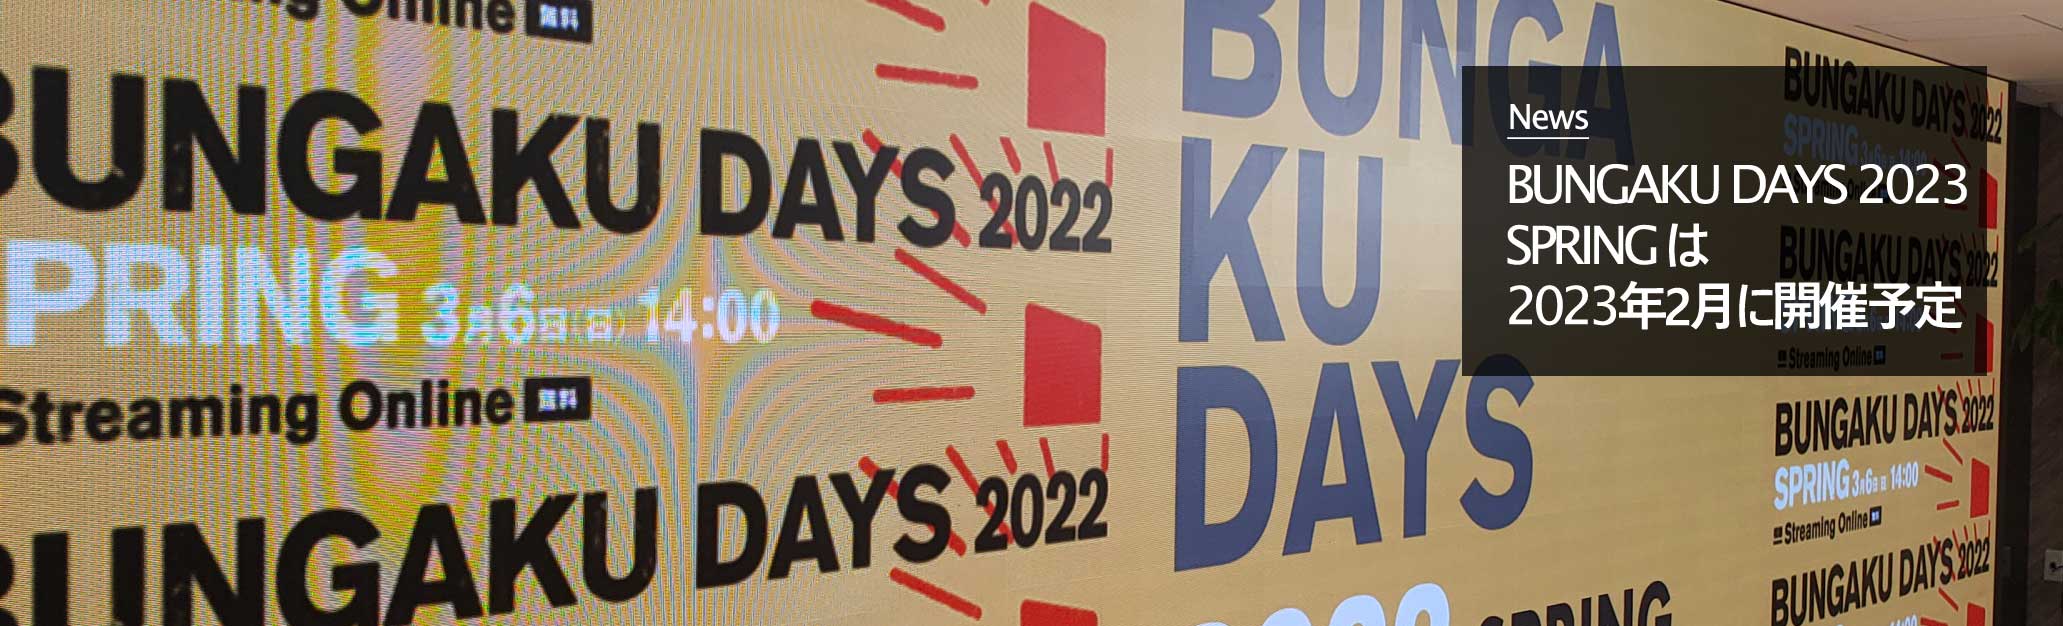 BUNGAKU DAYS 2023 SPRINGは2023年に開催予定